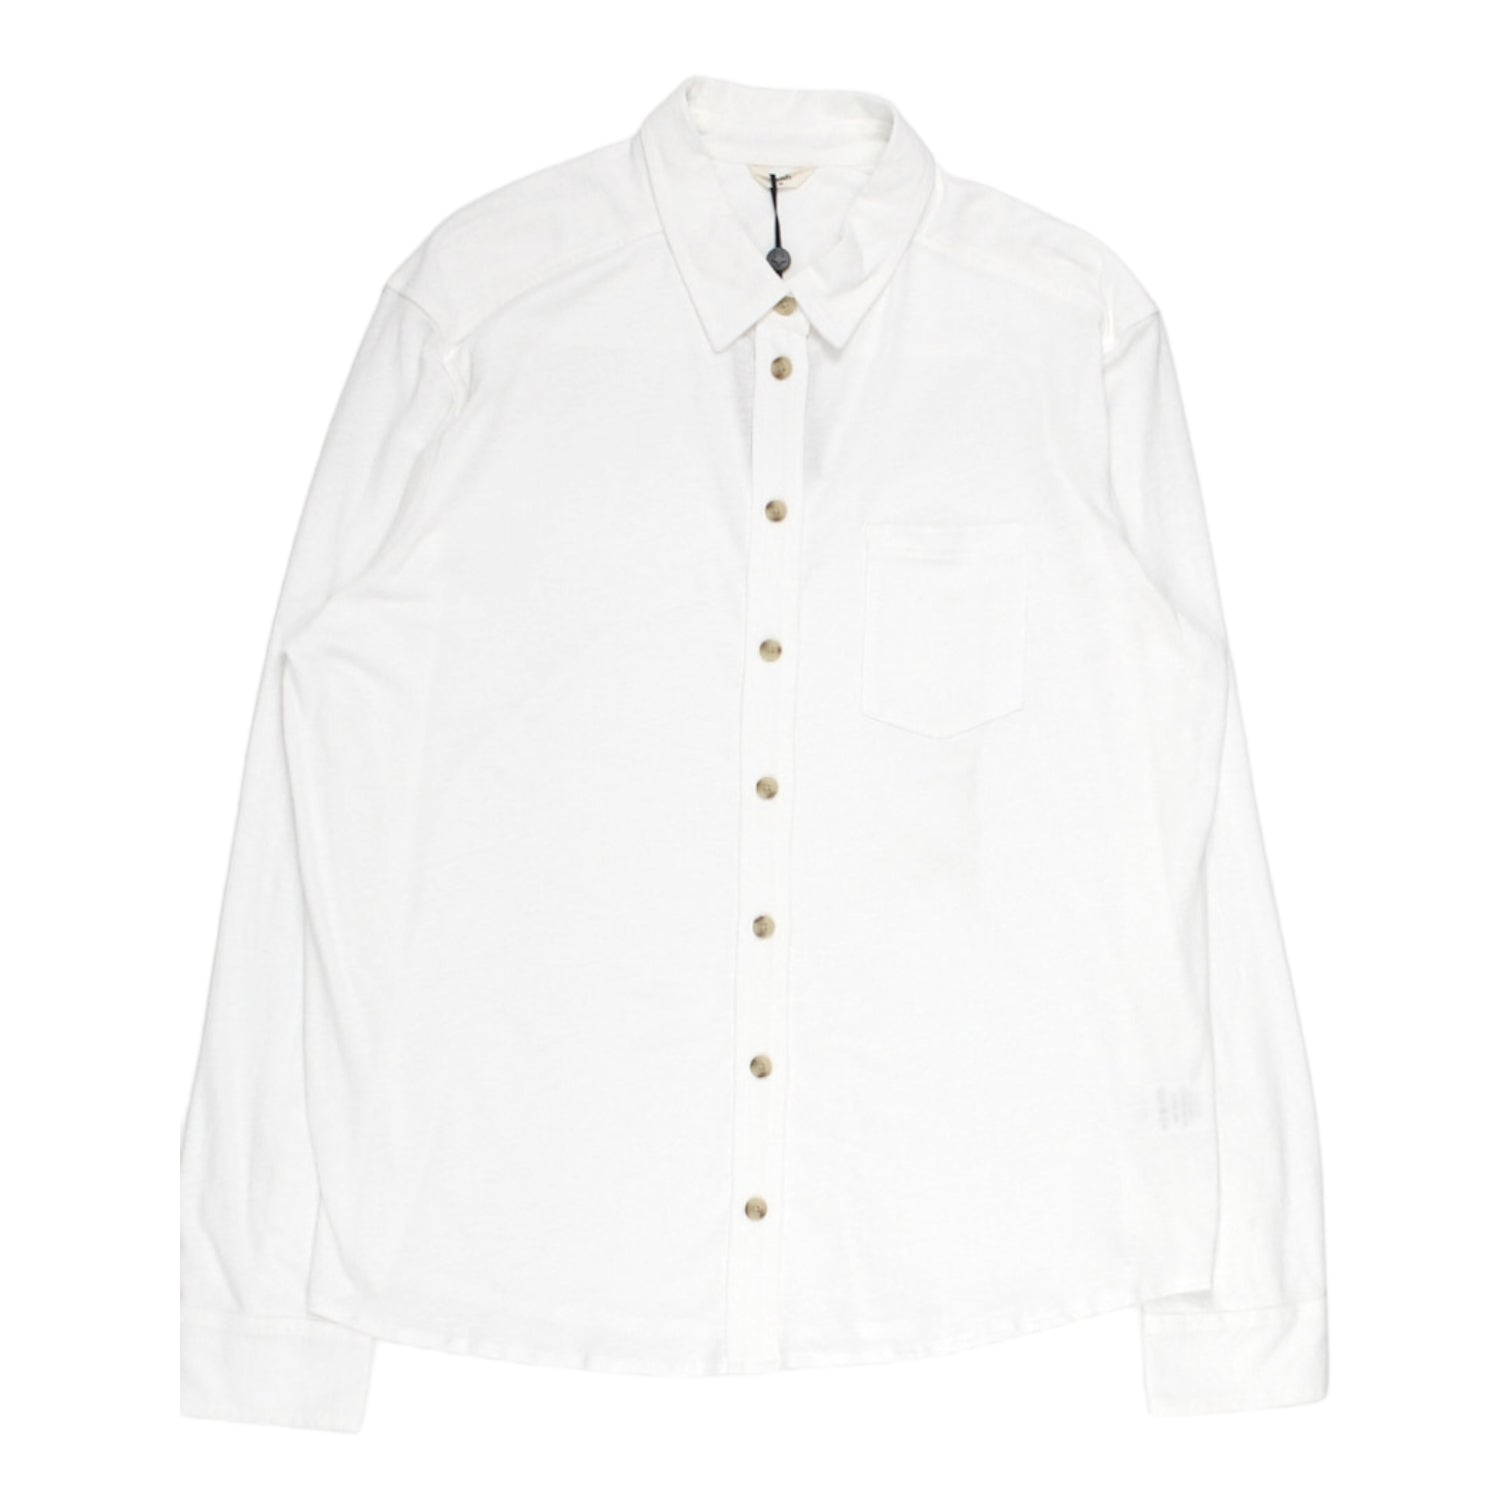 Hush White Linen Jersey Shirt